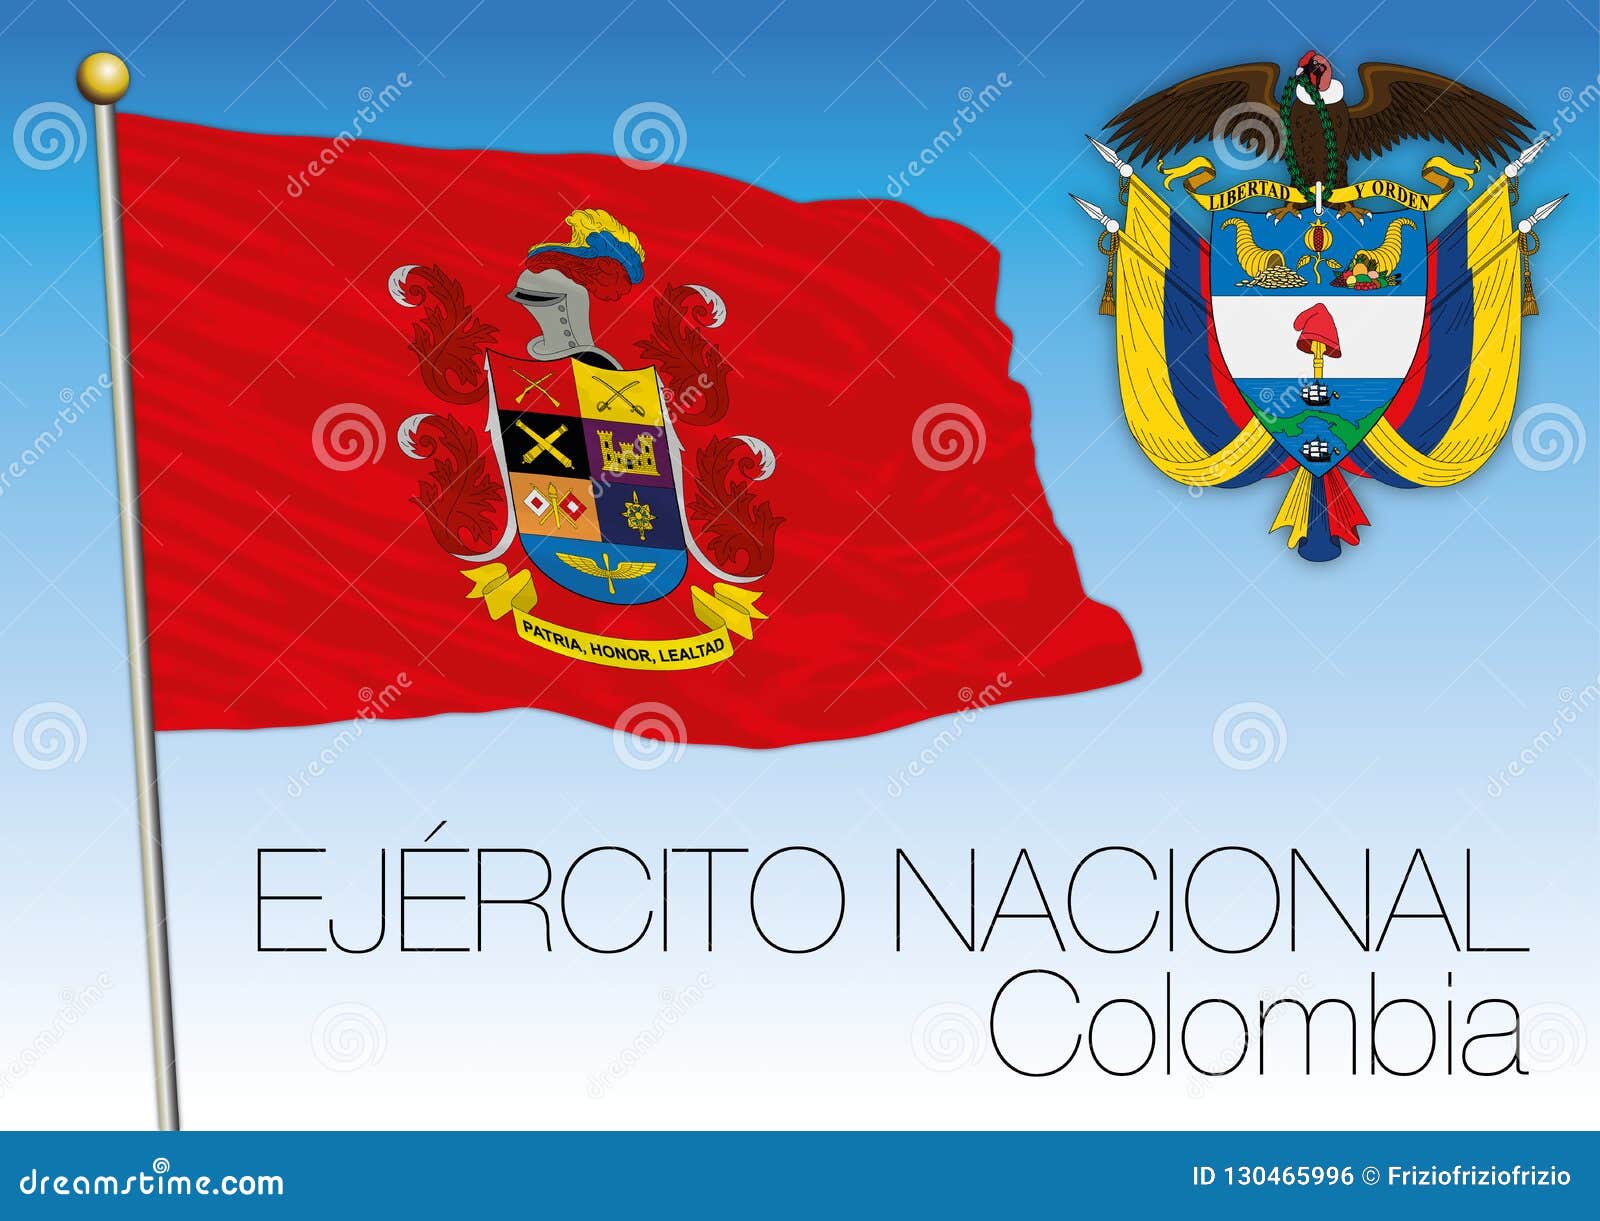 ejercito nacional flag, colombian army